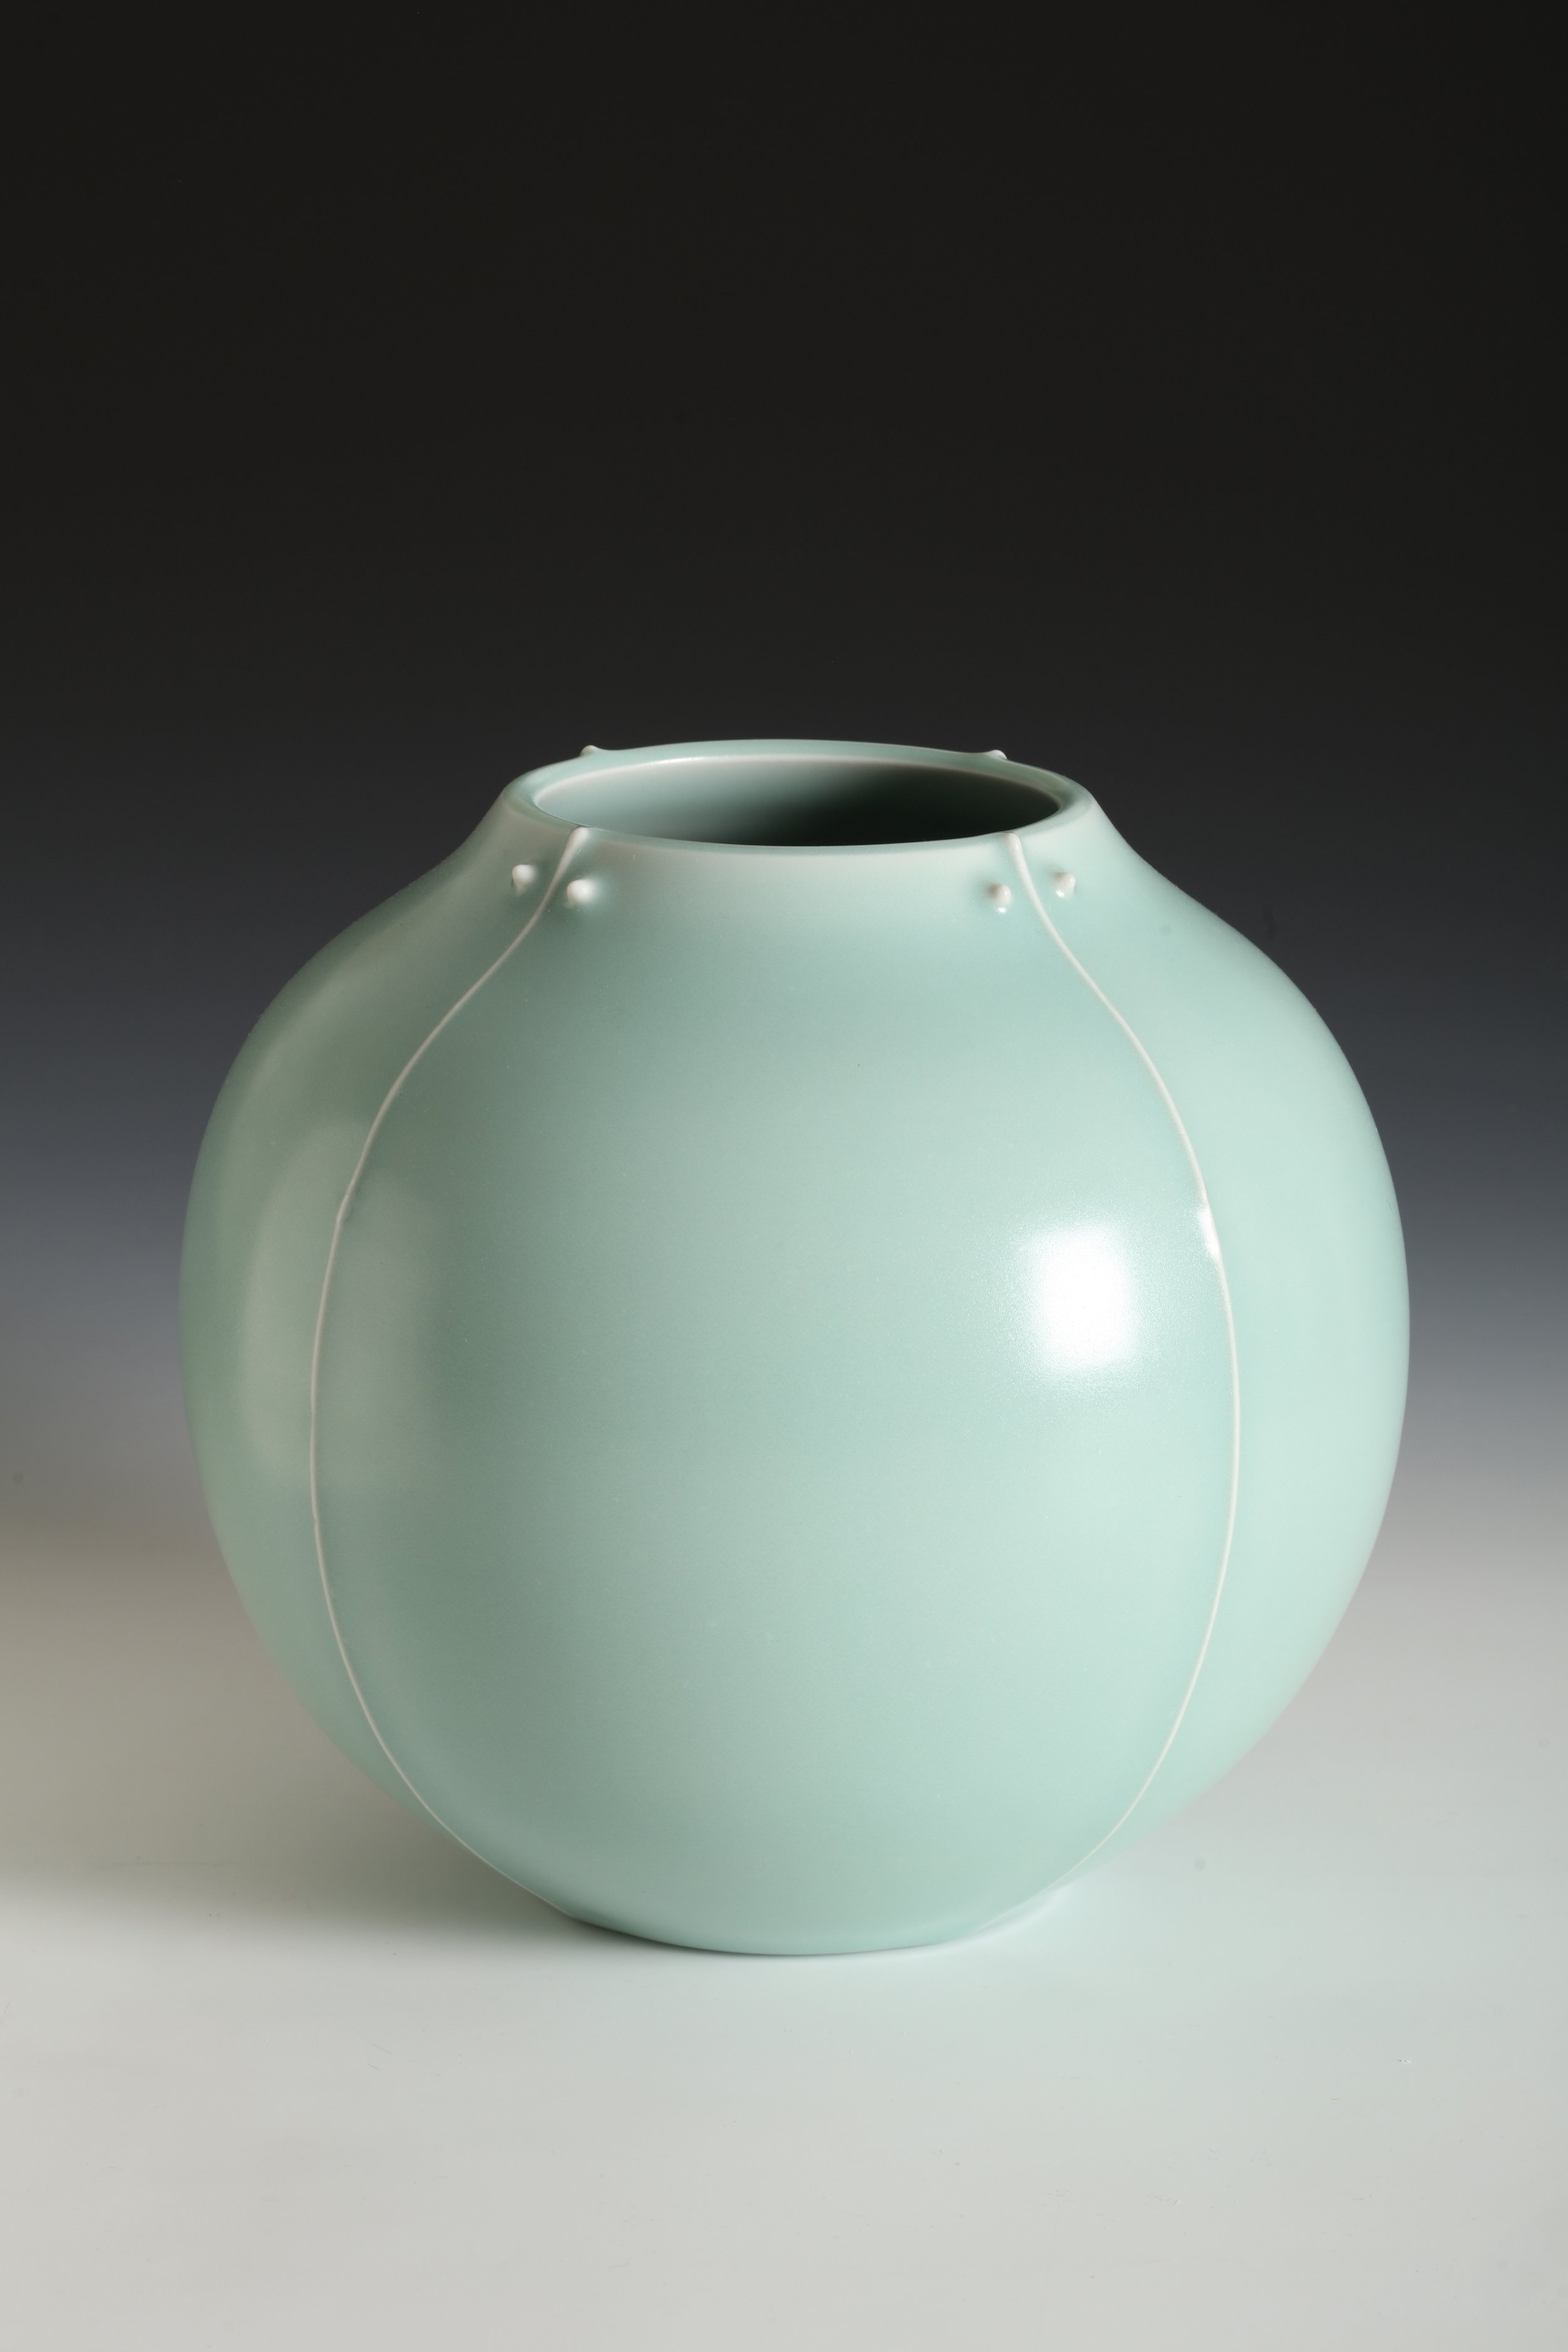  Sueharu Fukami,  Vase , ca. 1980. Porcelain with seihakuji glaze, 8 x 8¾ x 8¾ inches ©Sueharu Fukami, courtesy of Fou Gallery and Thomsen Gallery 